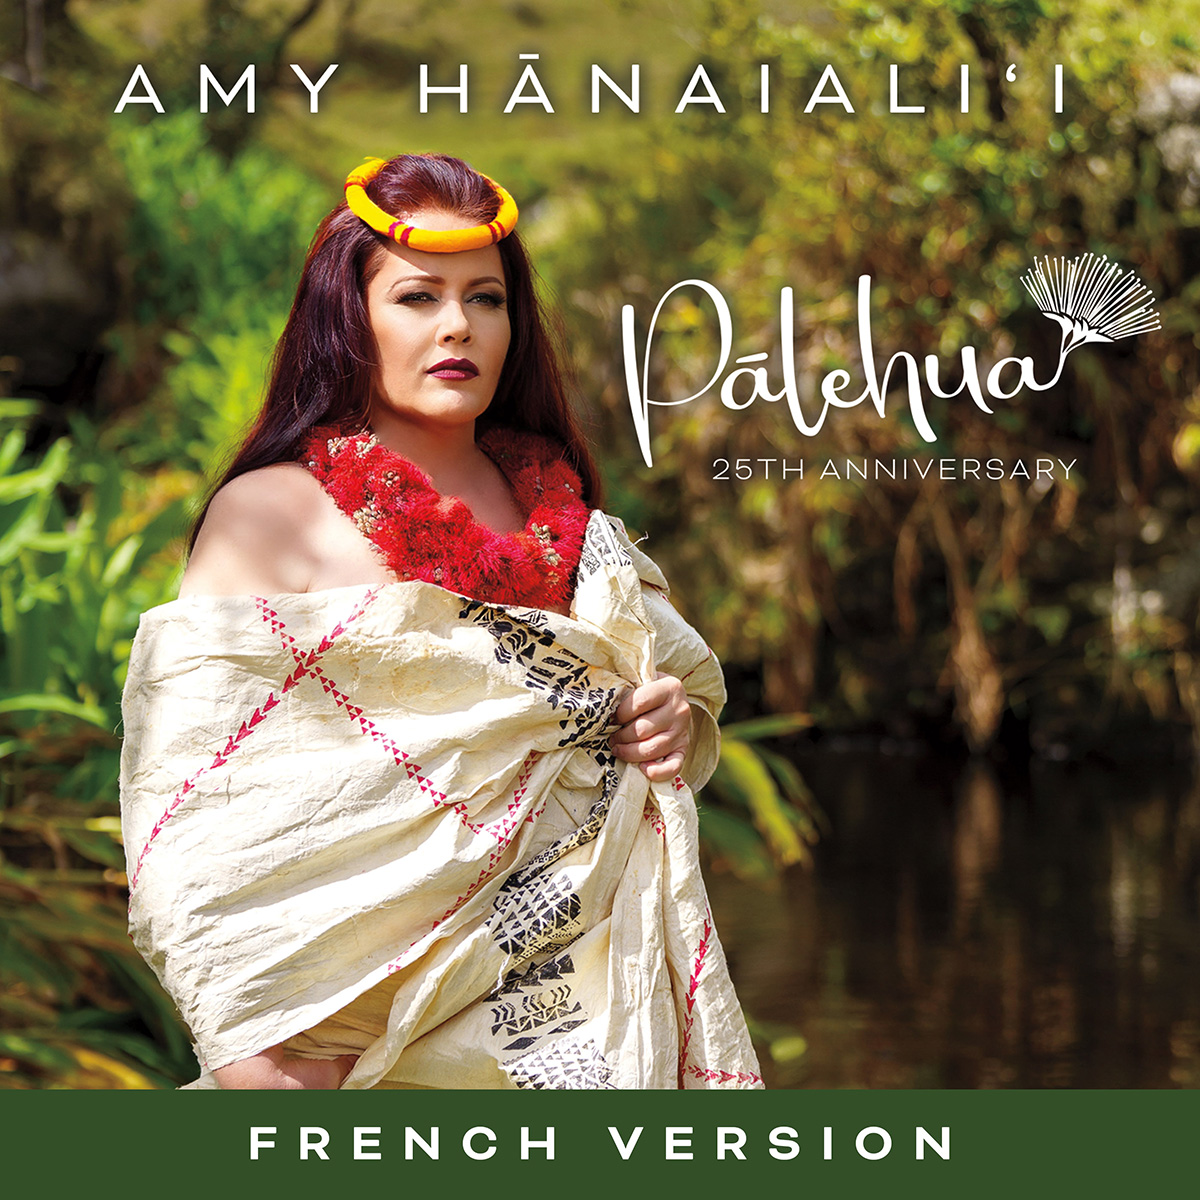 Amy Hānaiali'i Celebrates 25 Years of Pālehua